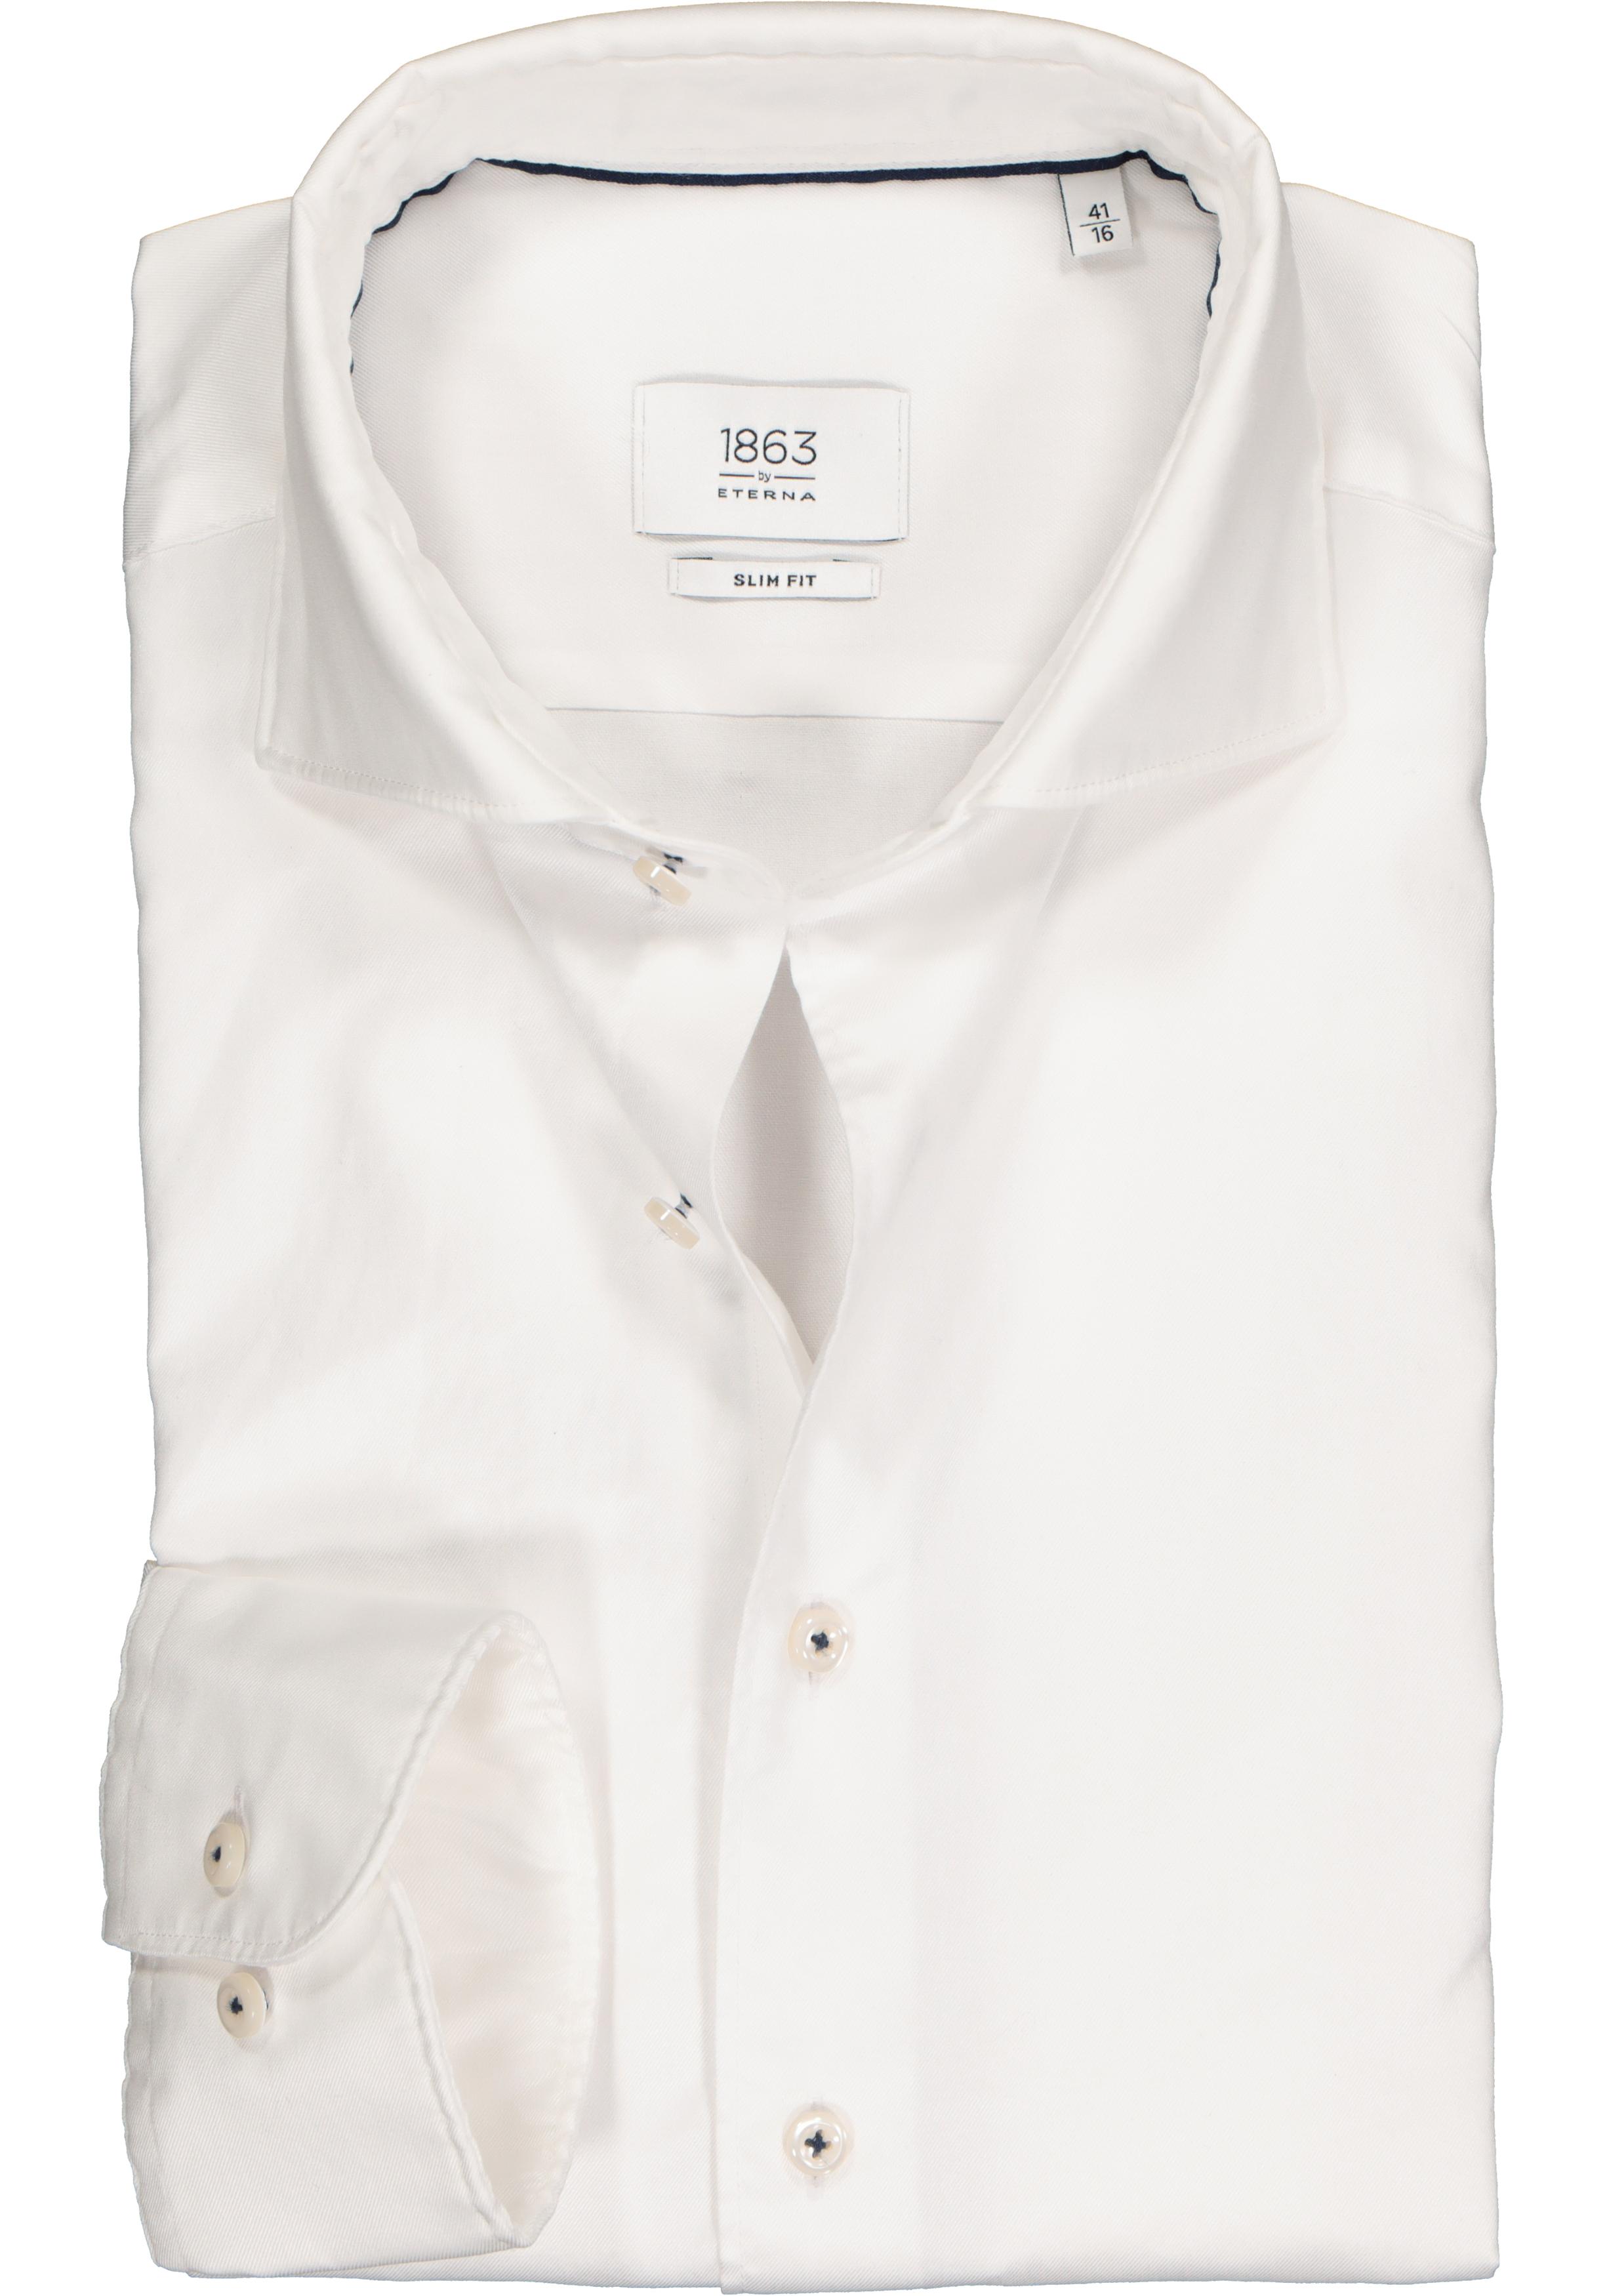 ETERNA 1863 slim fit casual Soft tailoring overhemd, twill heren overhemd, wit